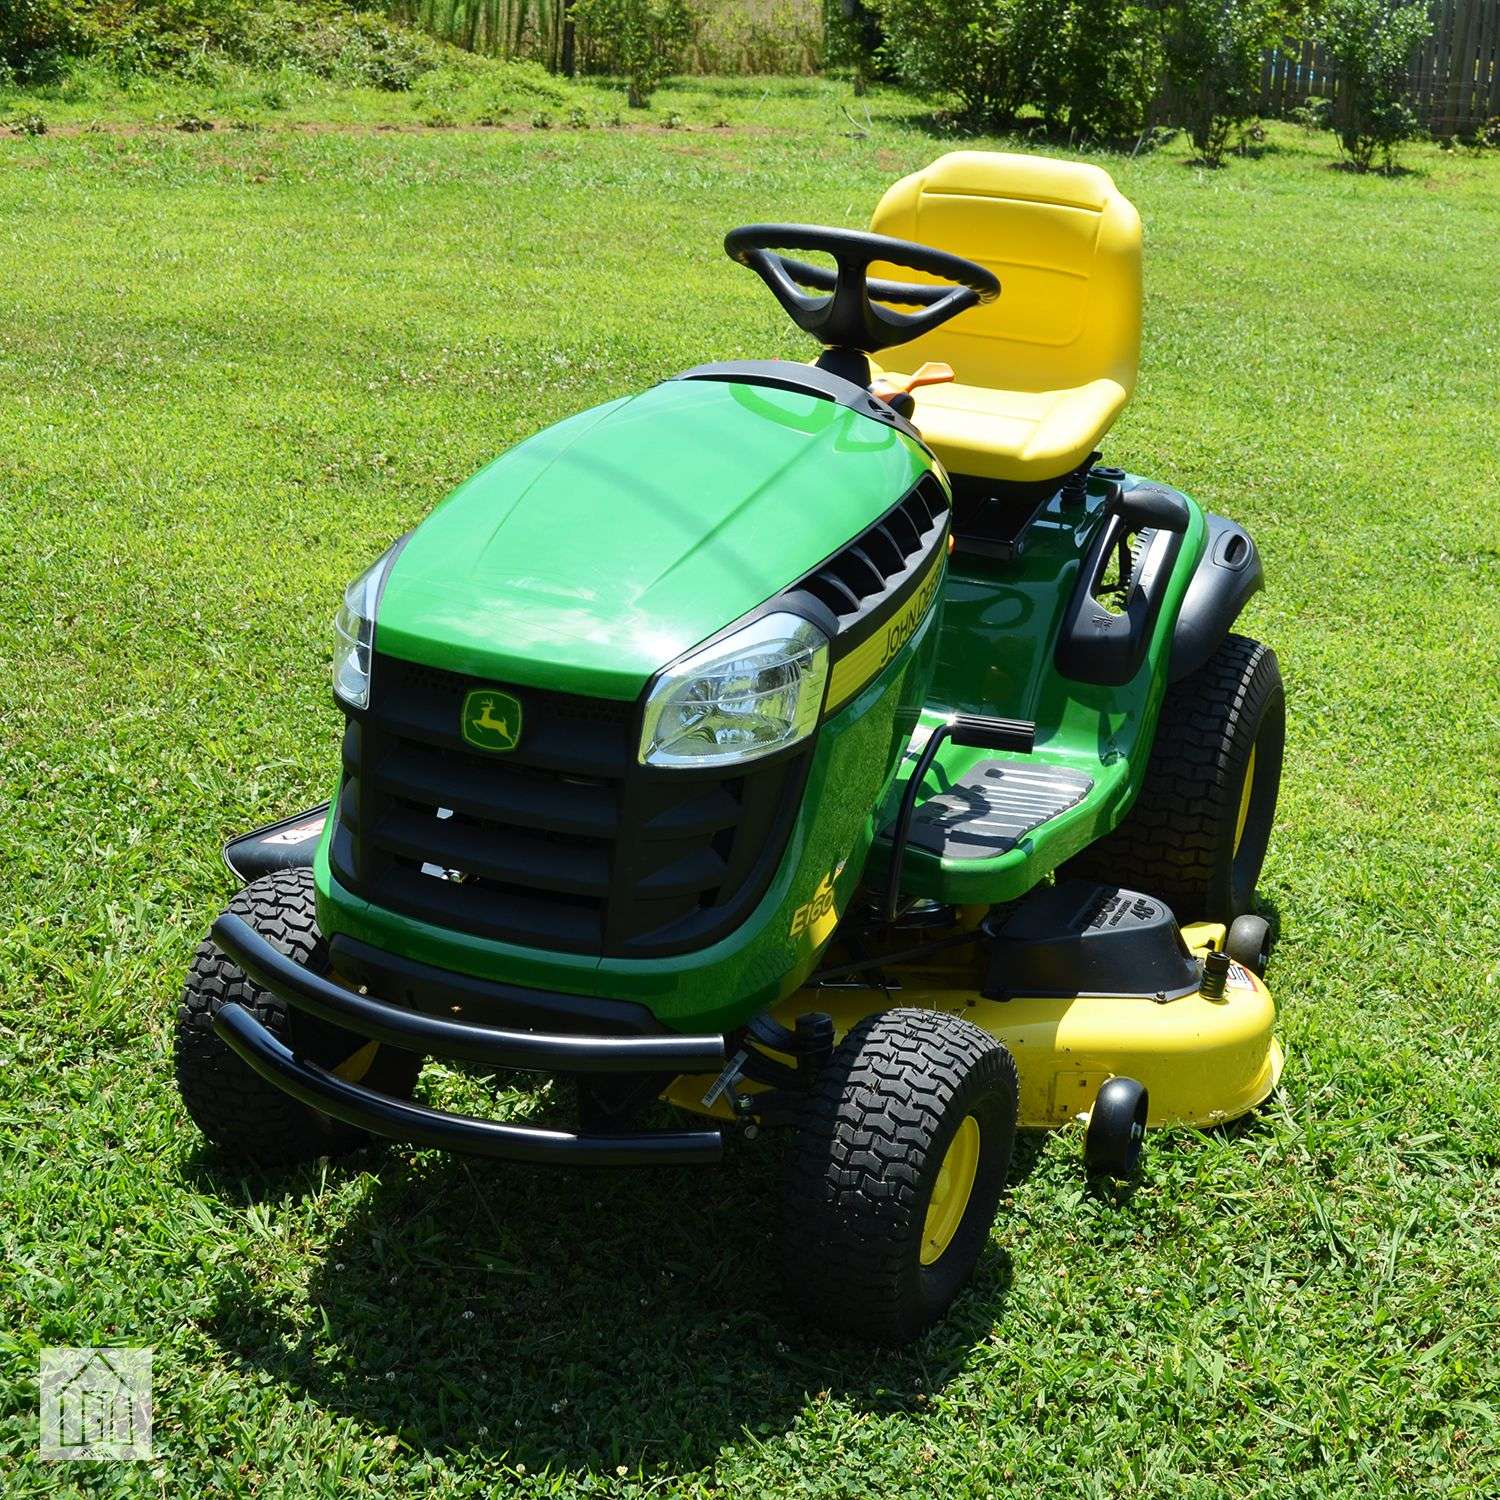 John Deere E160 Lawn Tractor Review: Powerful Yard Machine